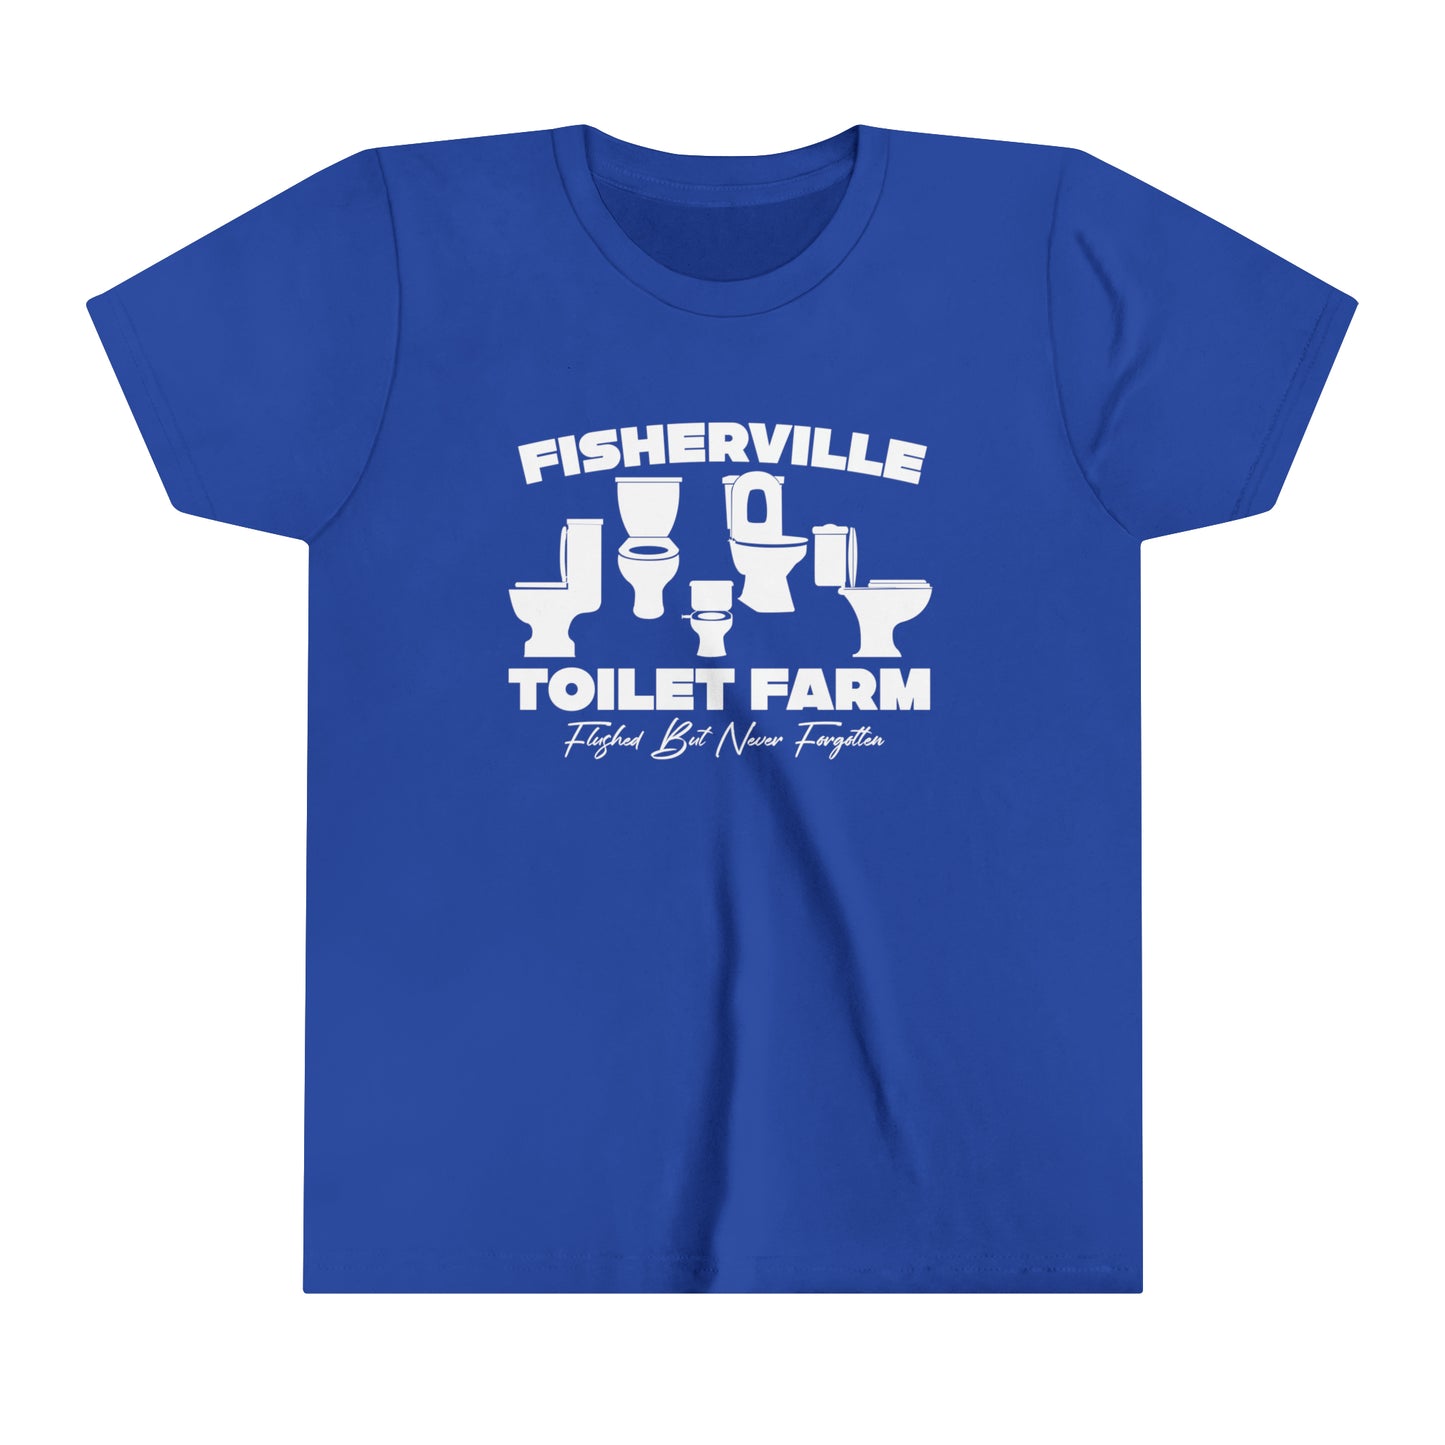 Fisherville Toilet Farm Youth Short Sleeve Tee